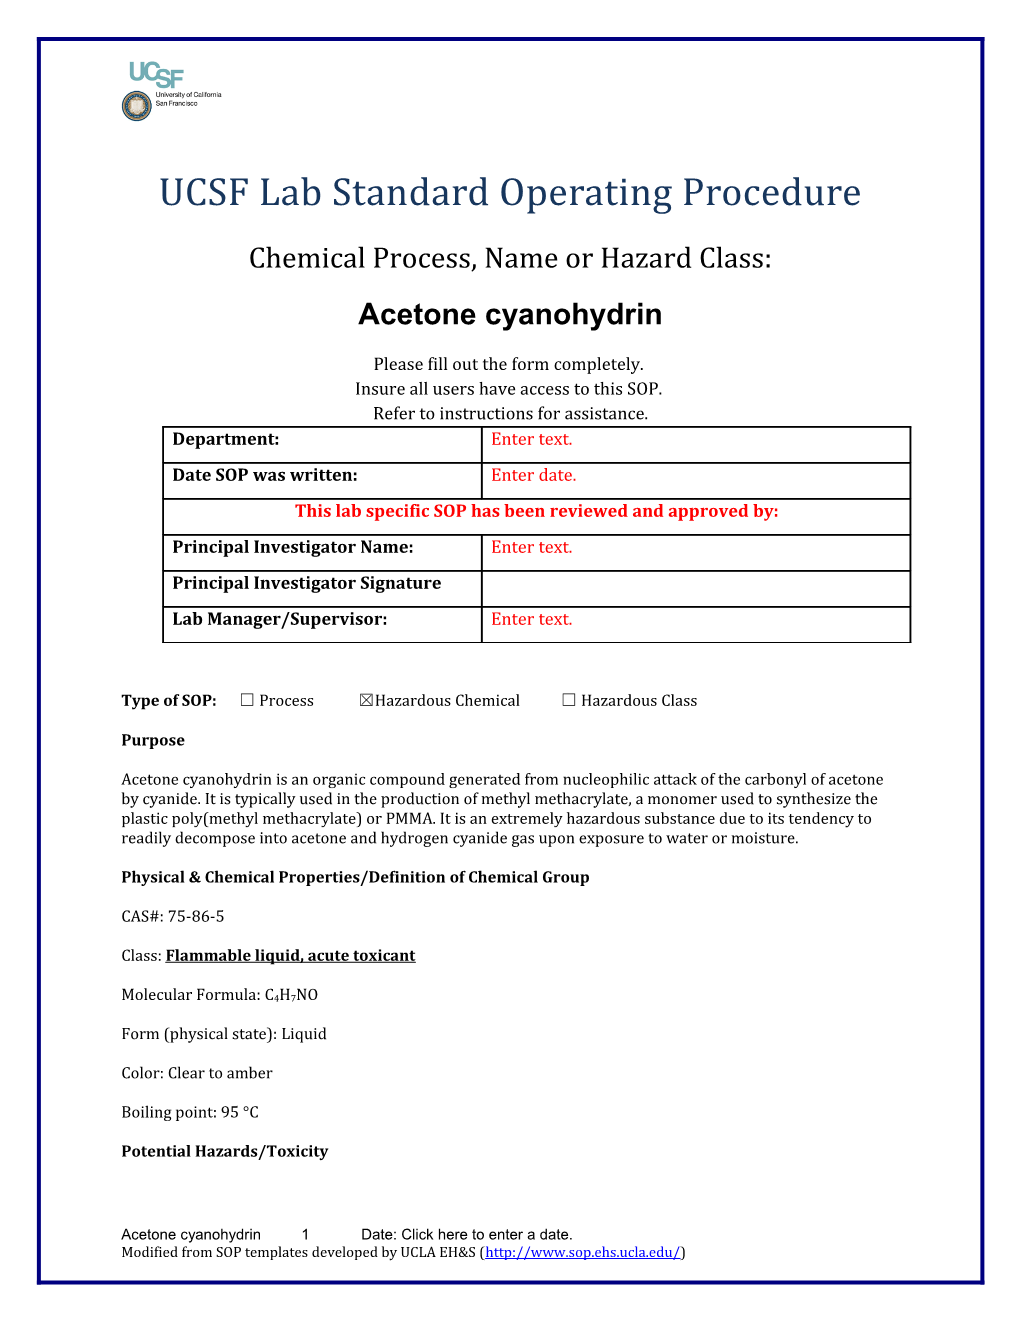 UCSF Lab Standard Operating Procedure s13